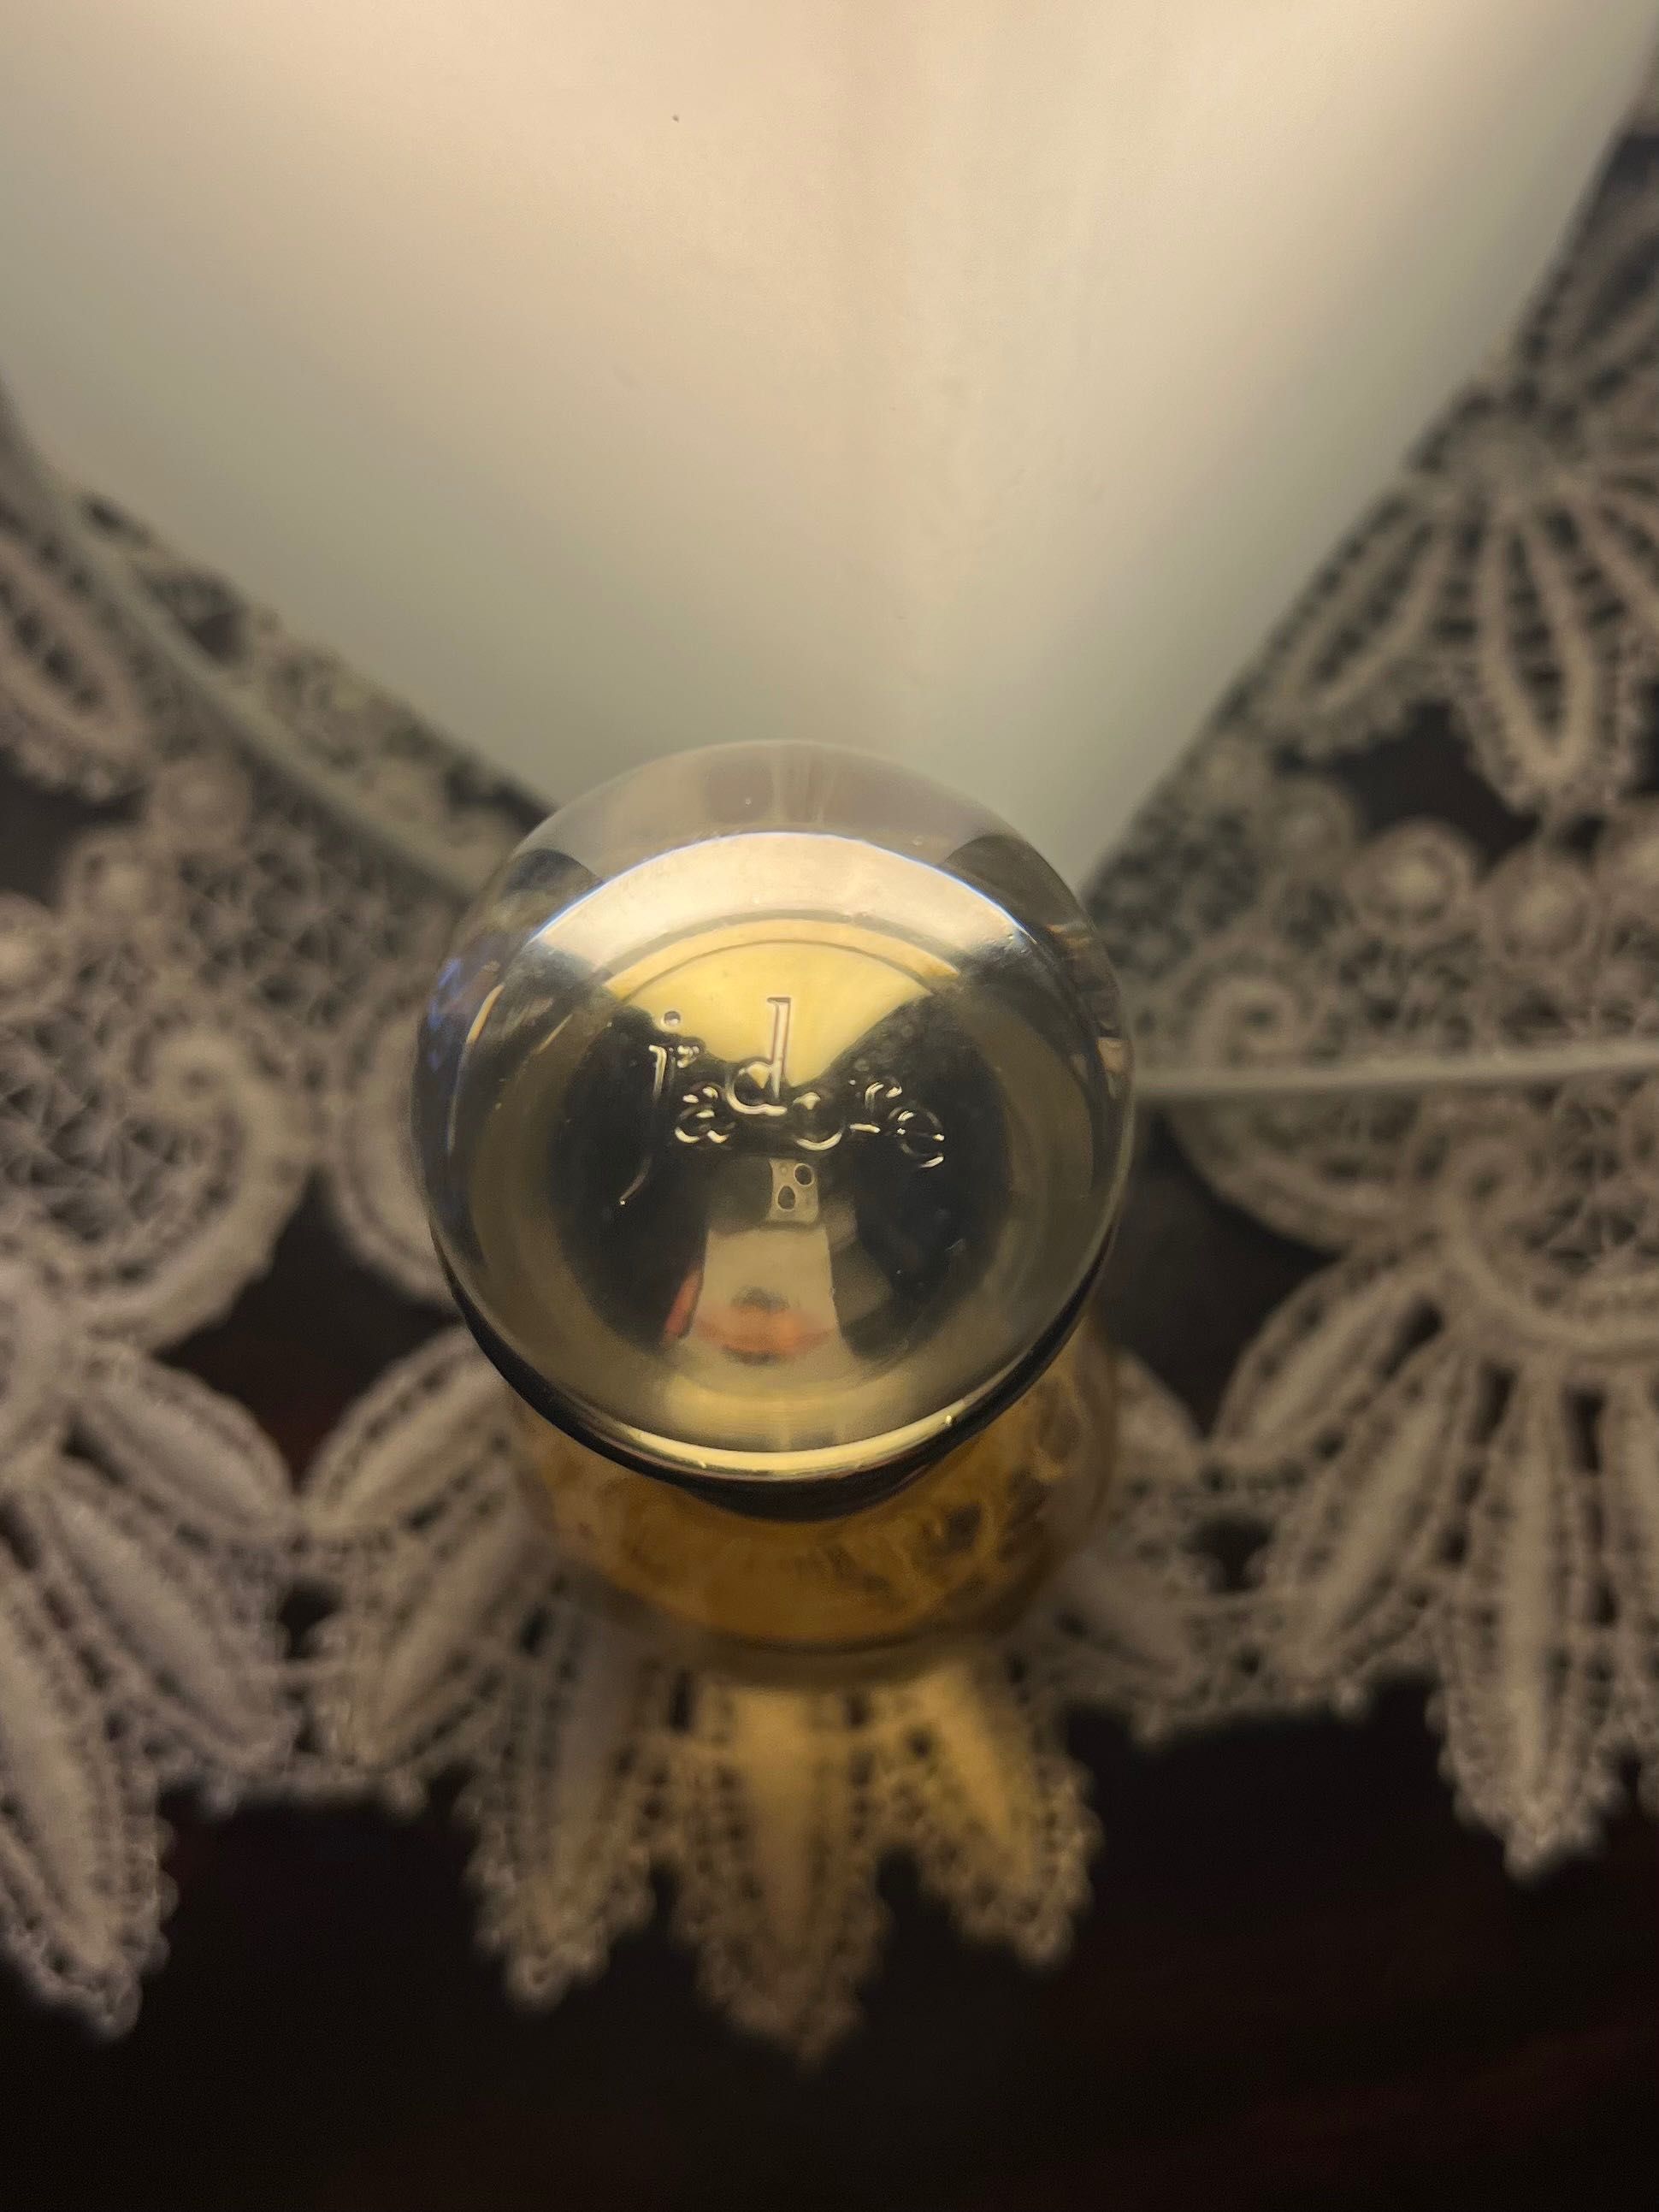 Vendo Perfume Roller-Pearl Christian Dior J’Adore 20ml